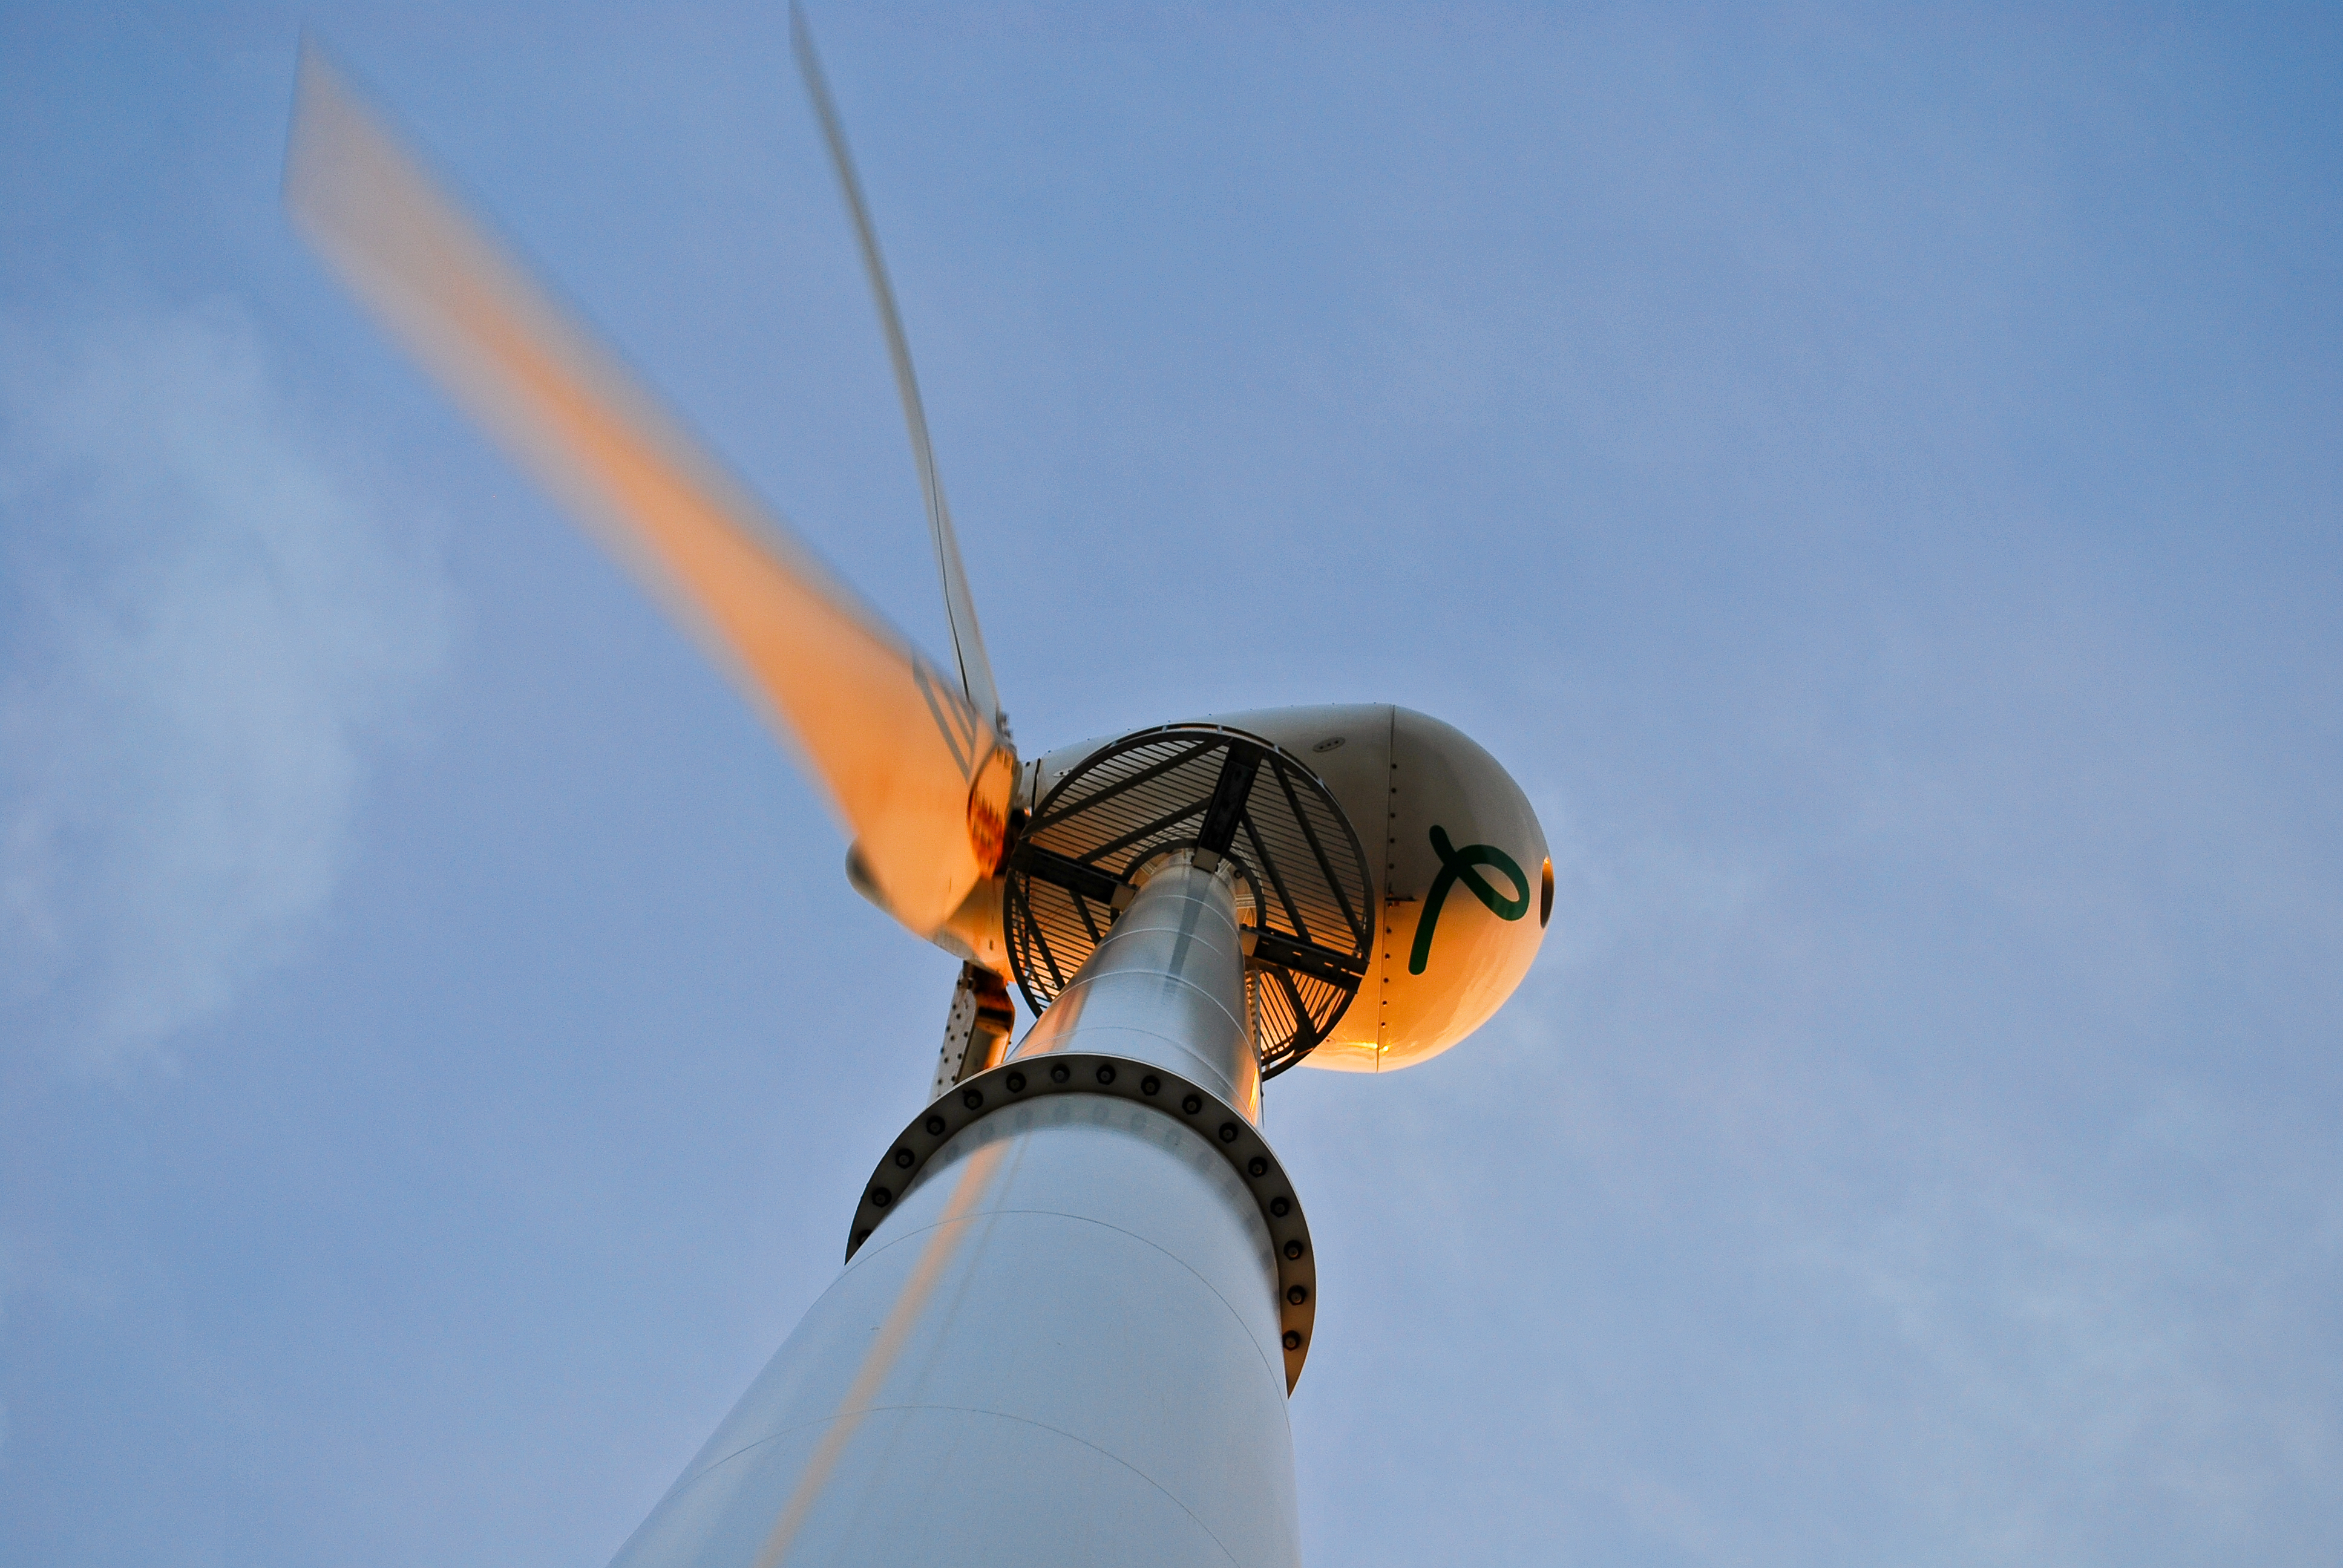 Precipice Arbejdsløs nudler Endurance E3120 50kW Wind Turbine | Earthmill | Sustainable Energy  Specialists